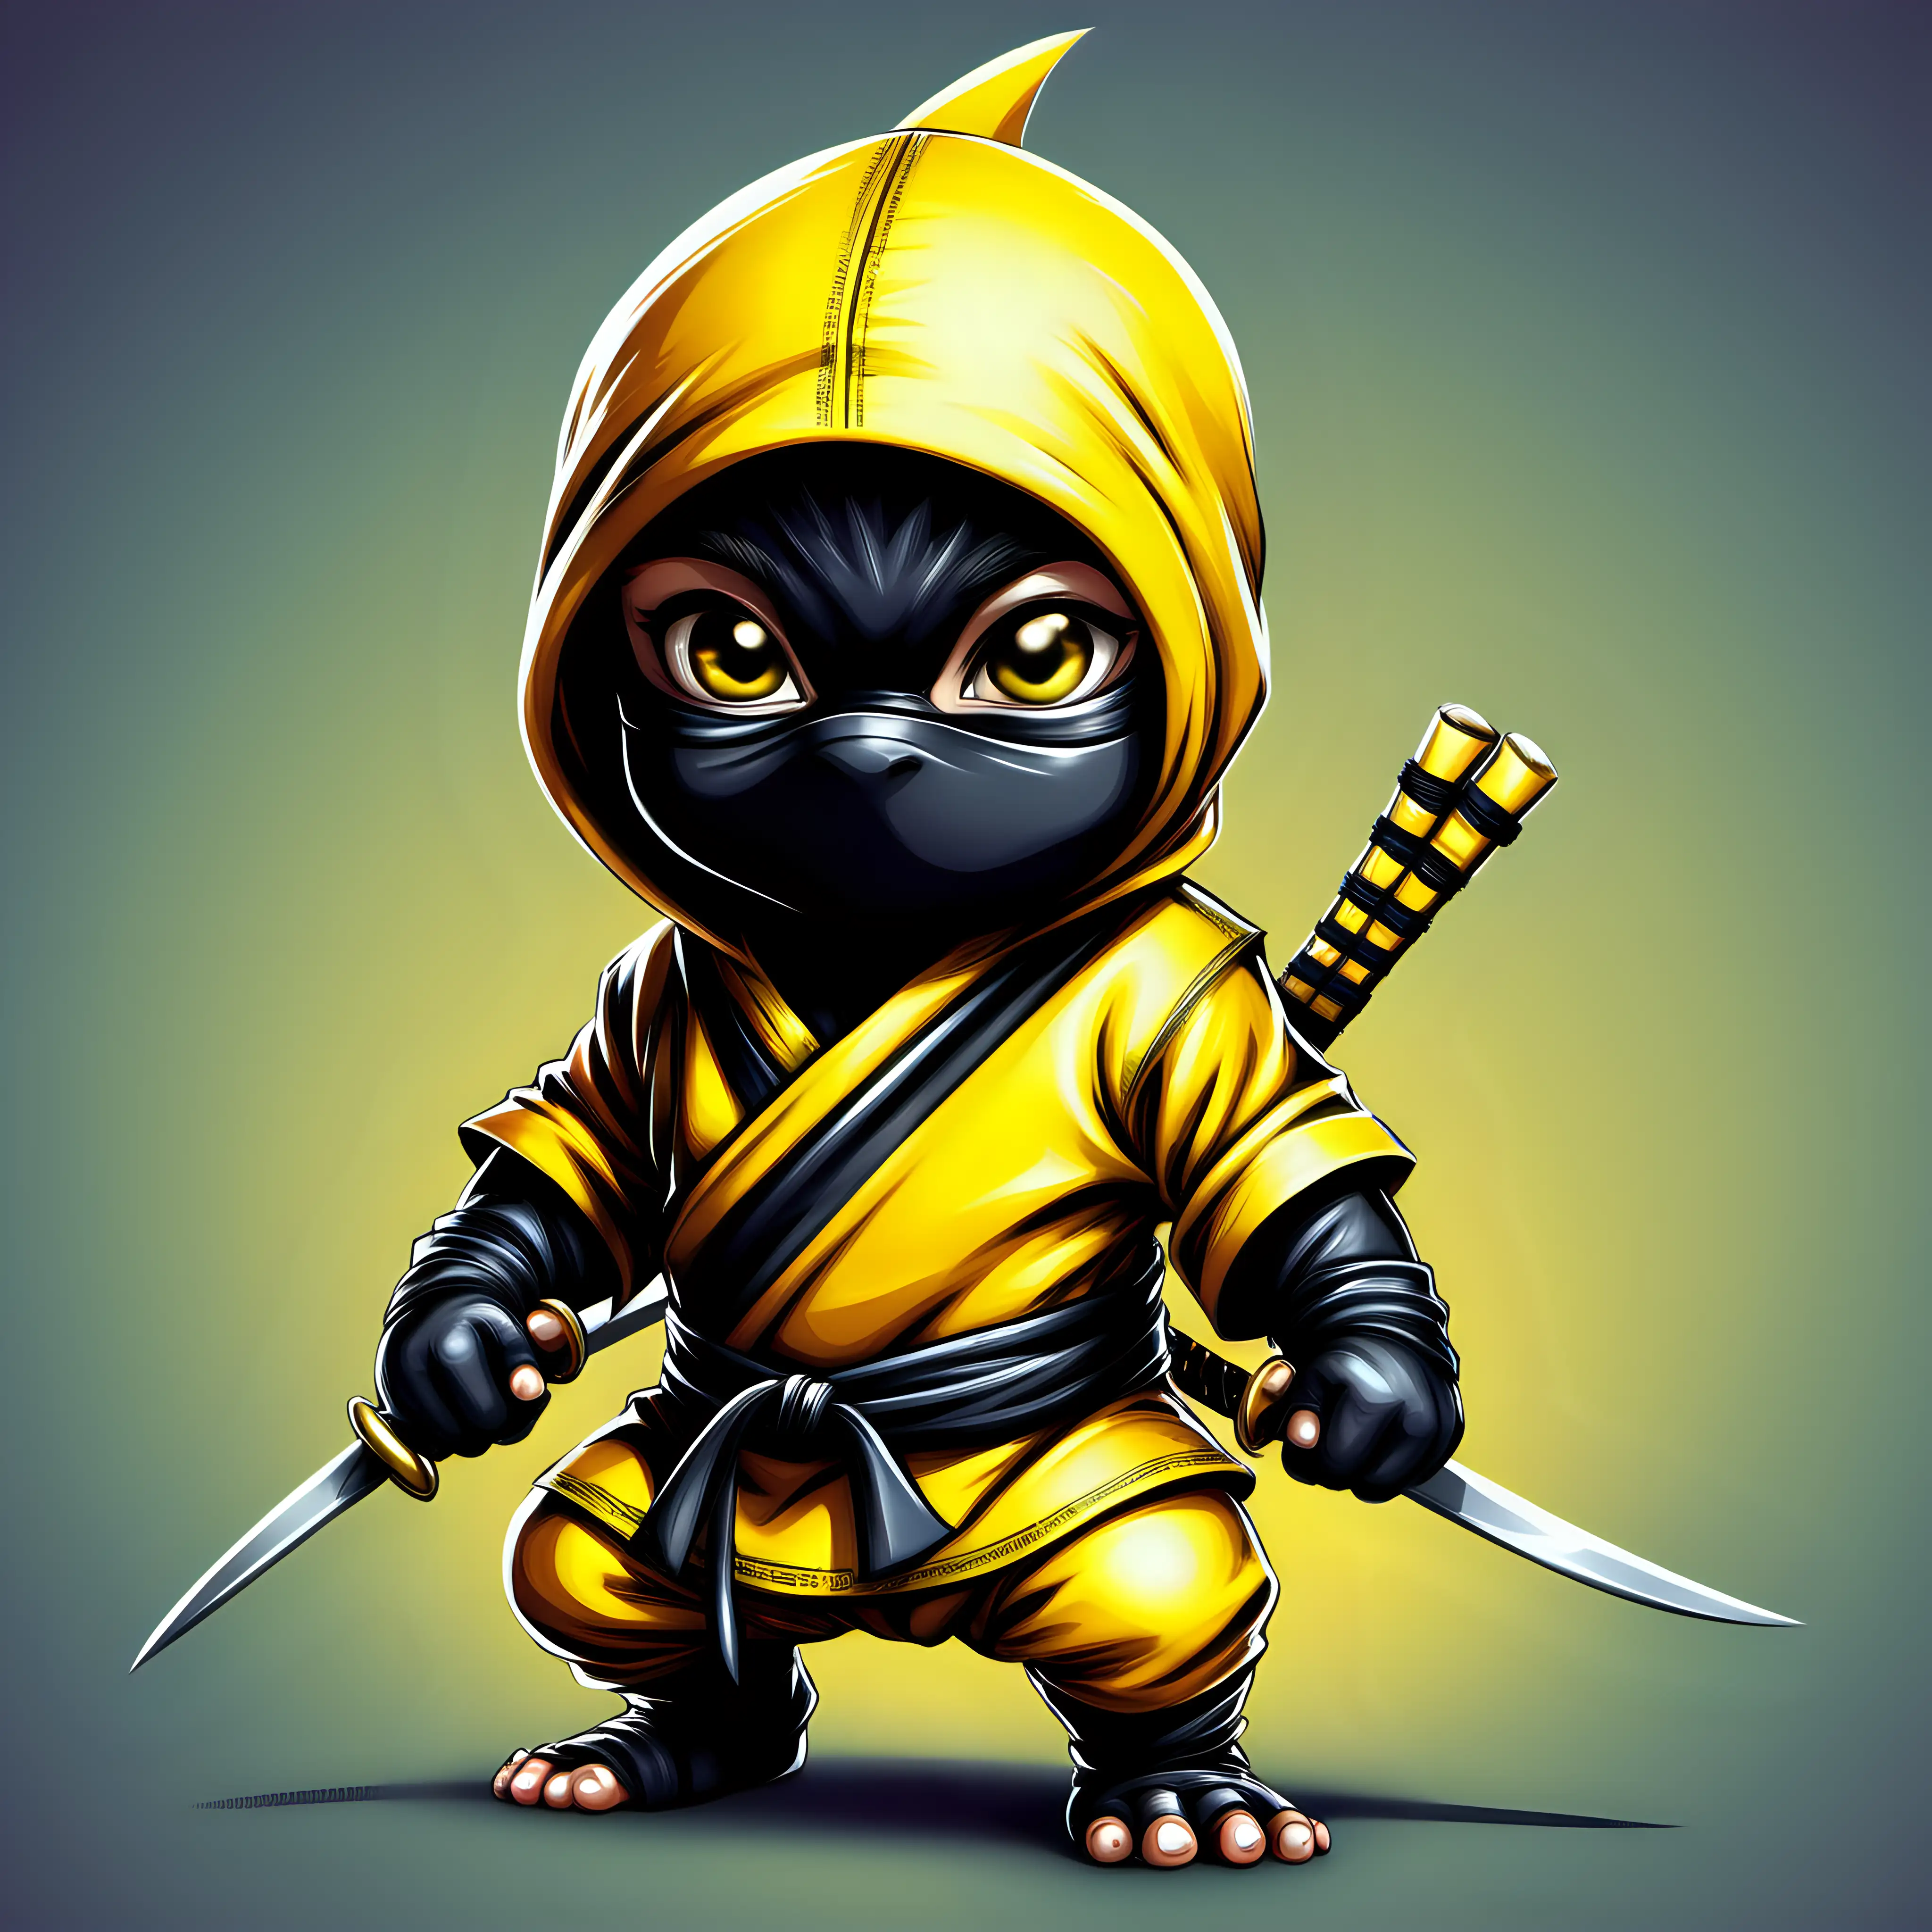 Adorable Baby Ninja Illustrated in Vibrant Yellow Comic Style